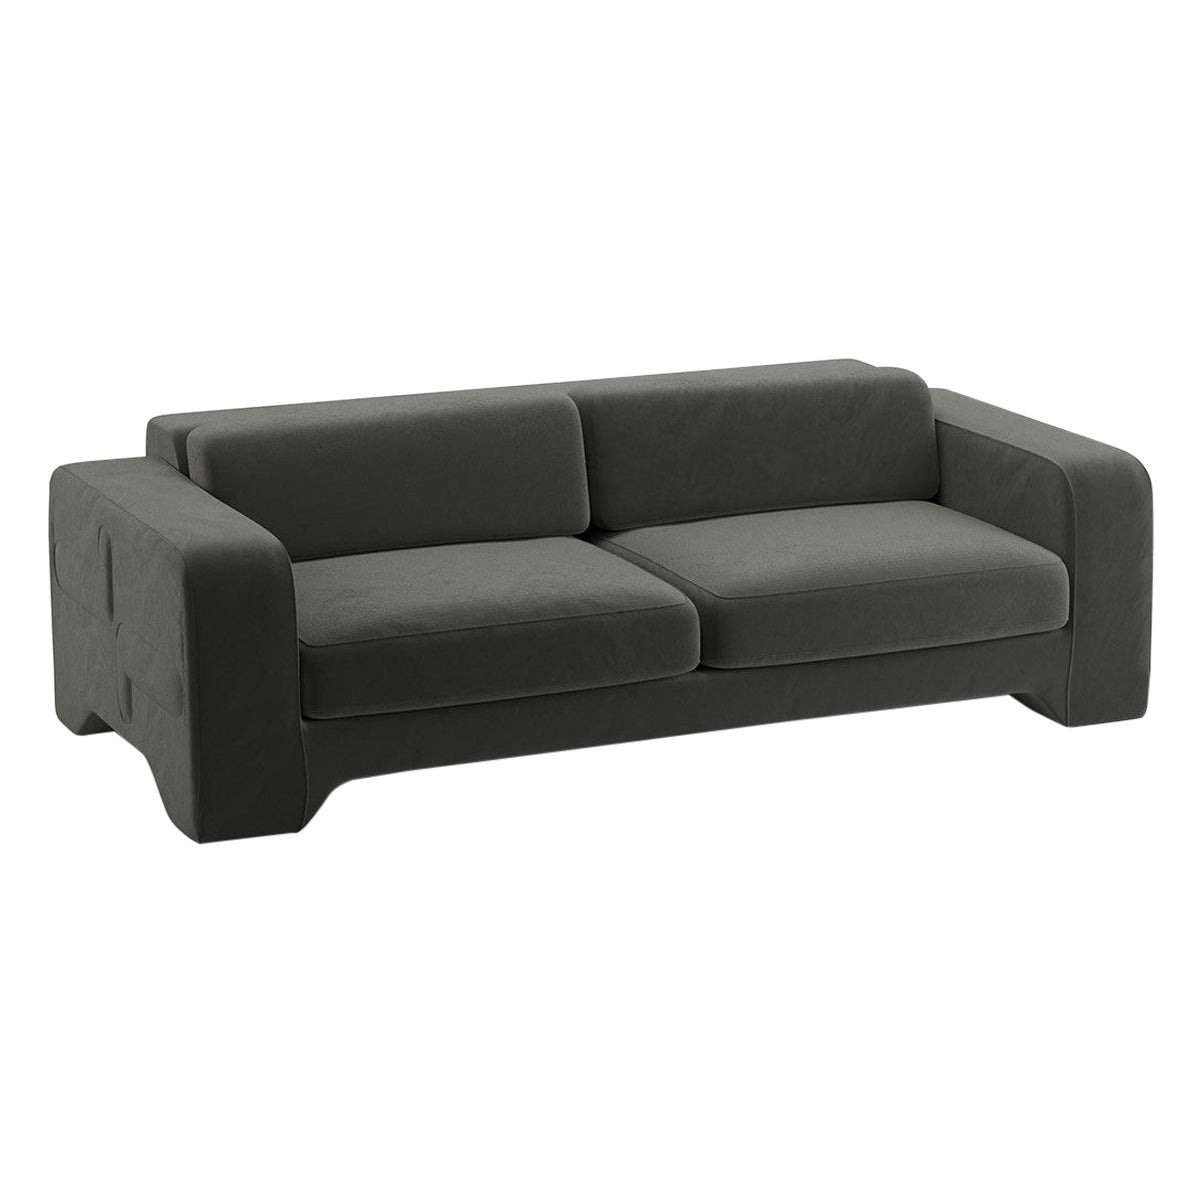 Popus Editions Giovanna 2.5 Seater Sofa in Khaki Como Velvet Upholstery